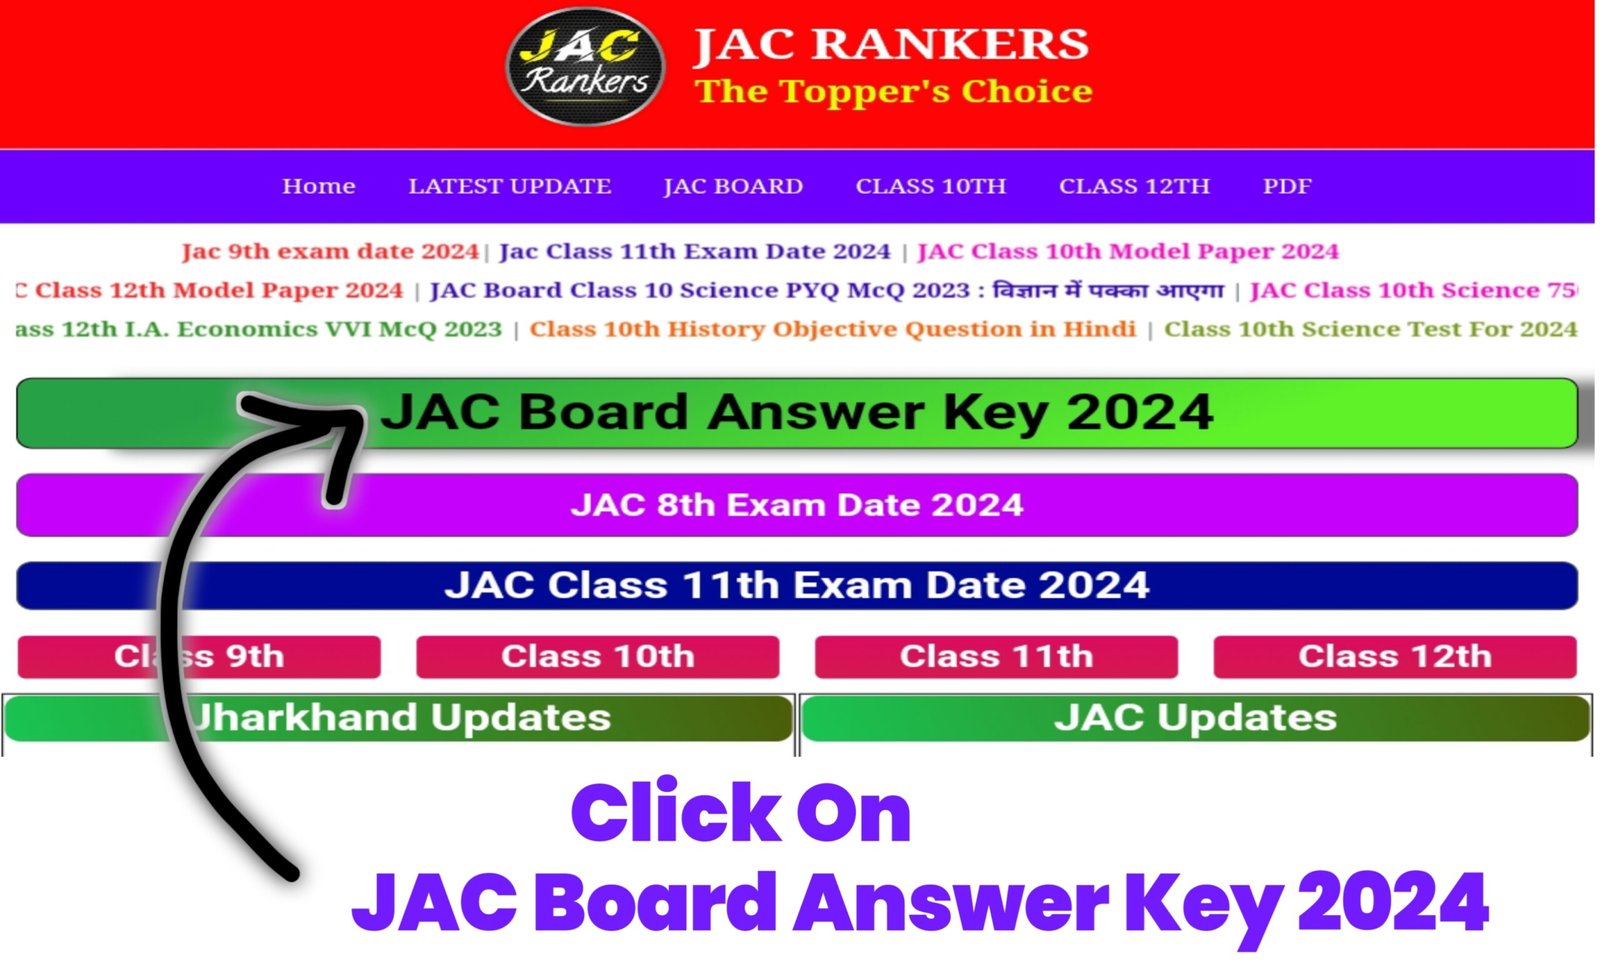 Jac board answer key 2